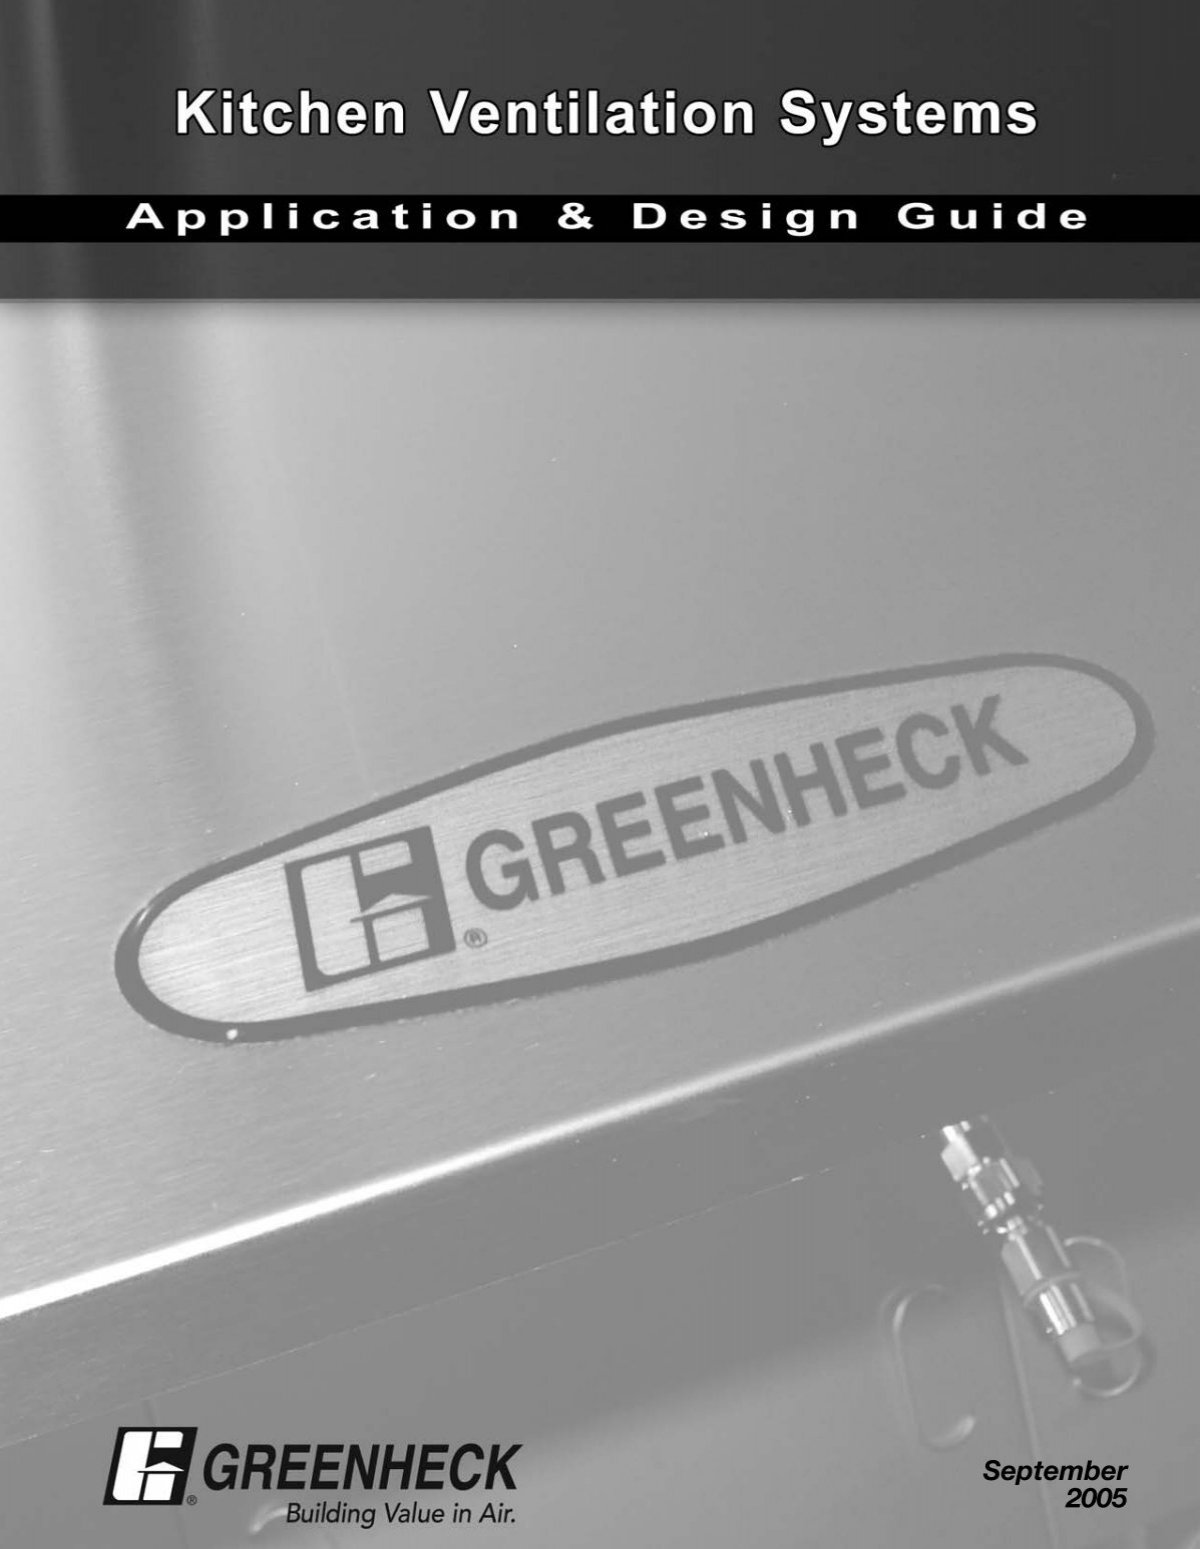 Kitchen Ventilation Systems - Application & Design Guide - Greenheck